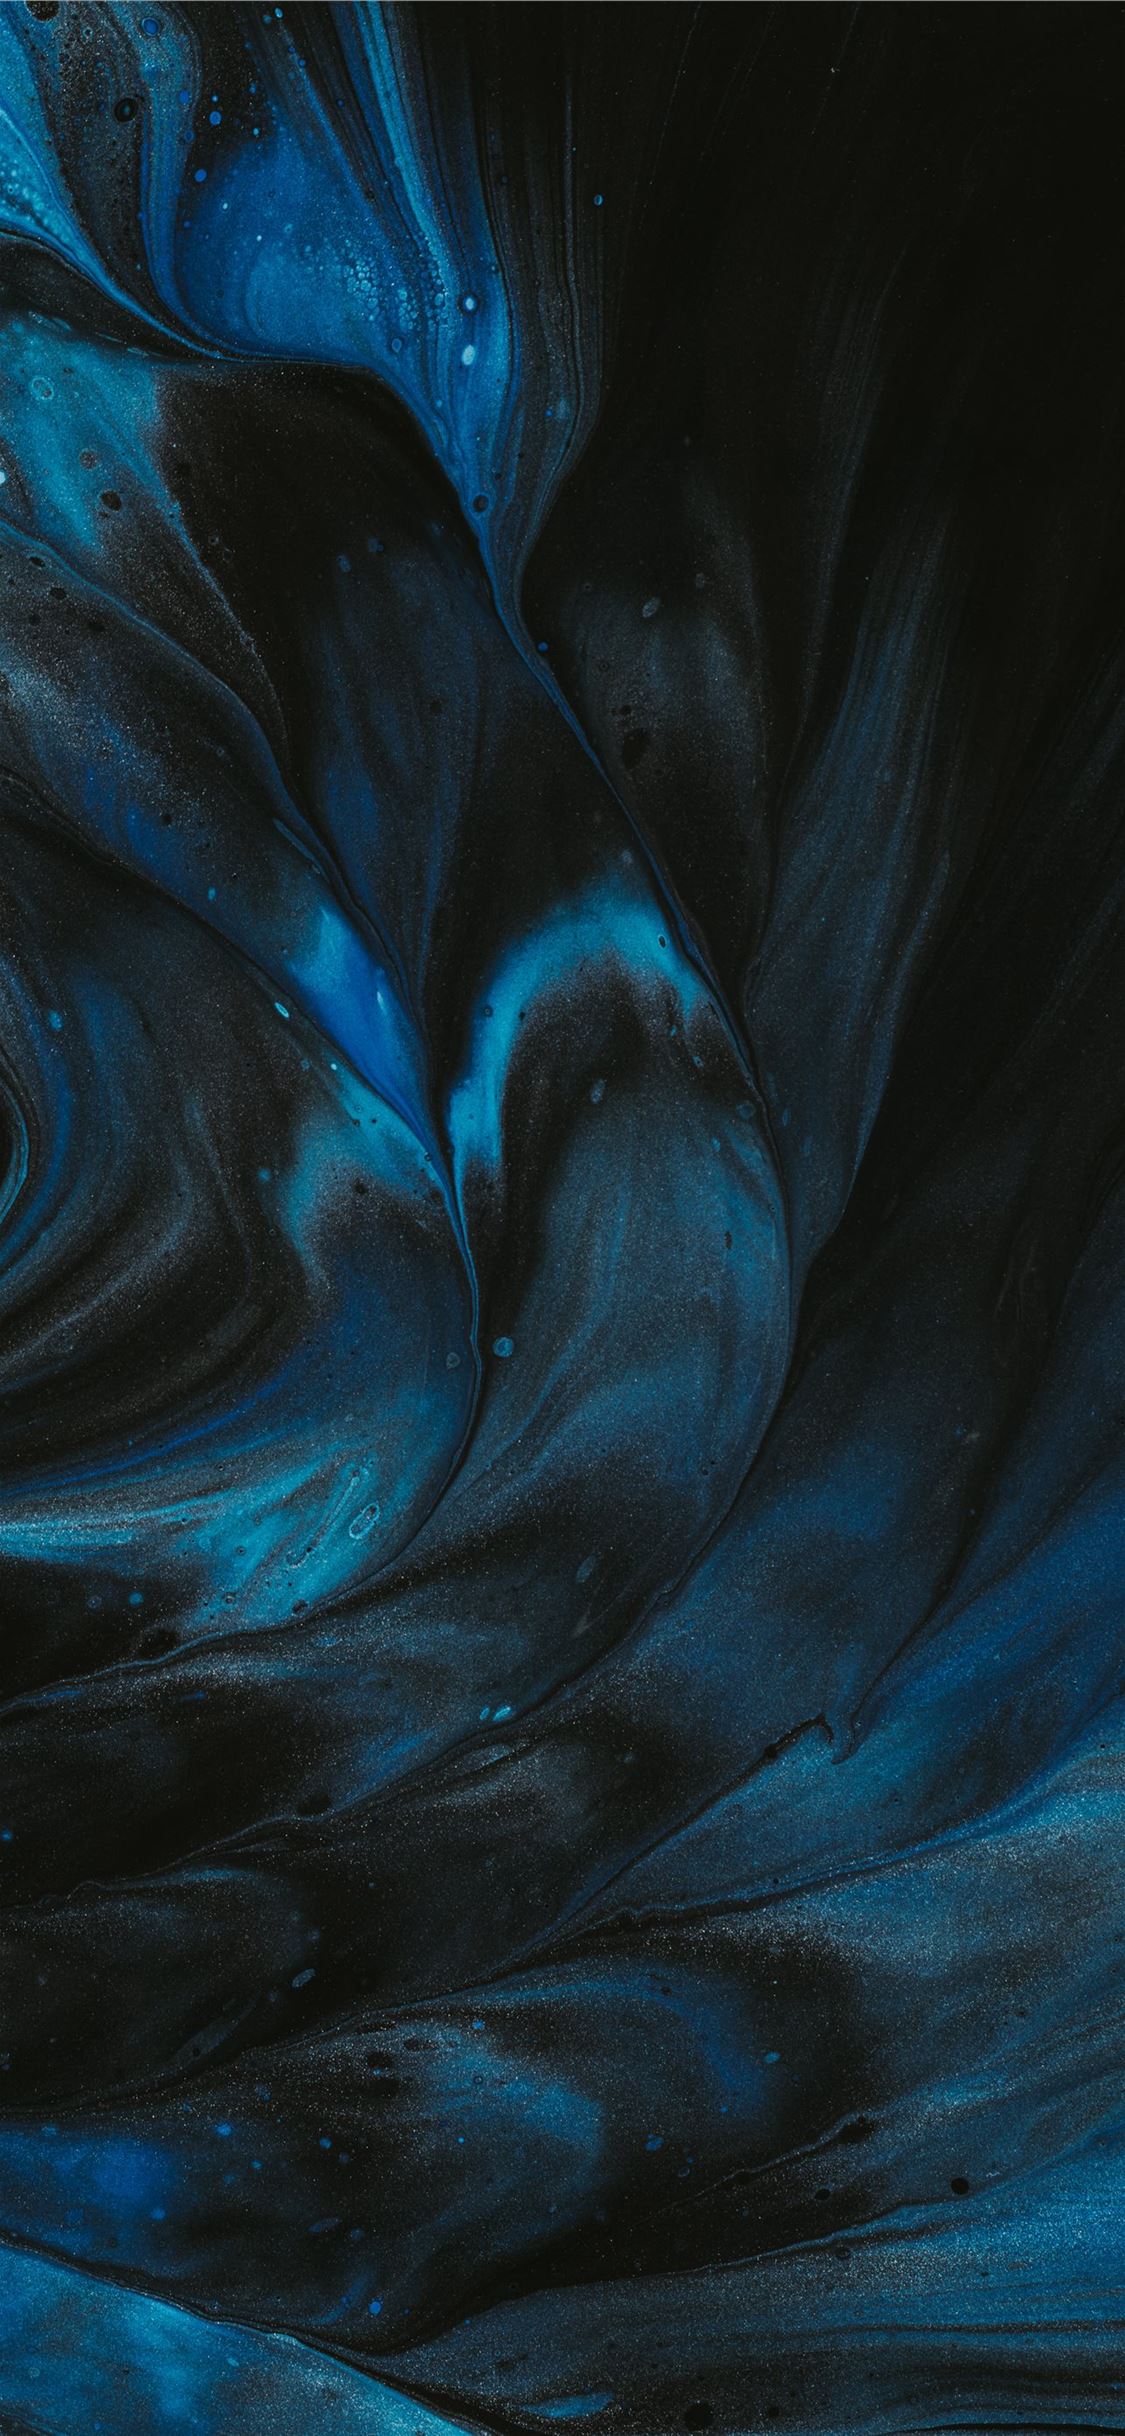 Dark blue Wallpaper - NawPic